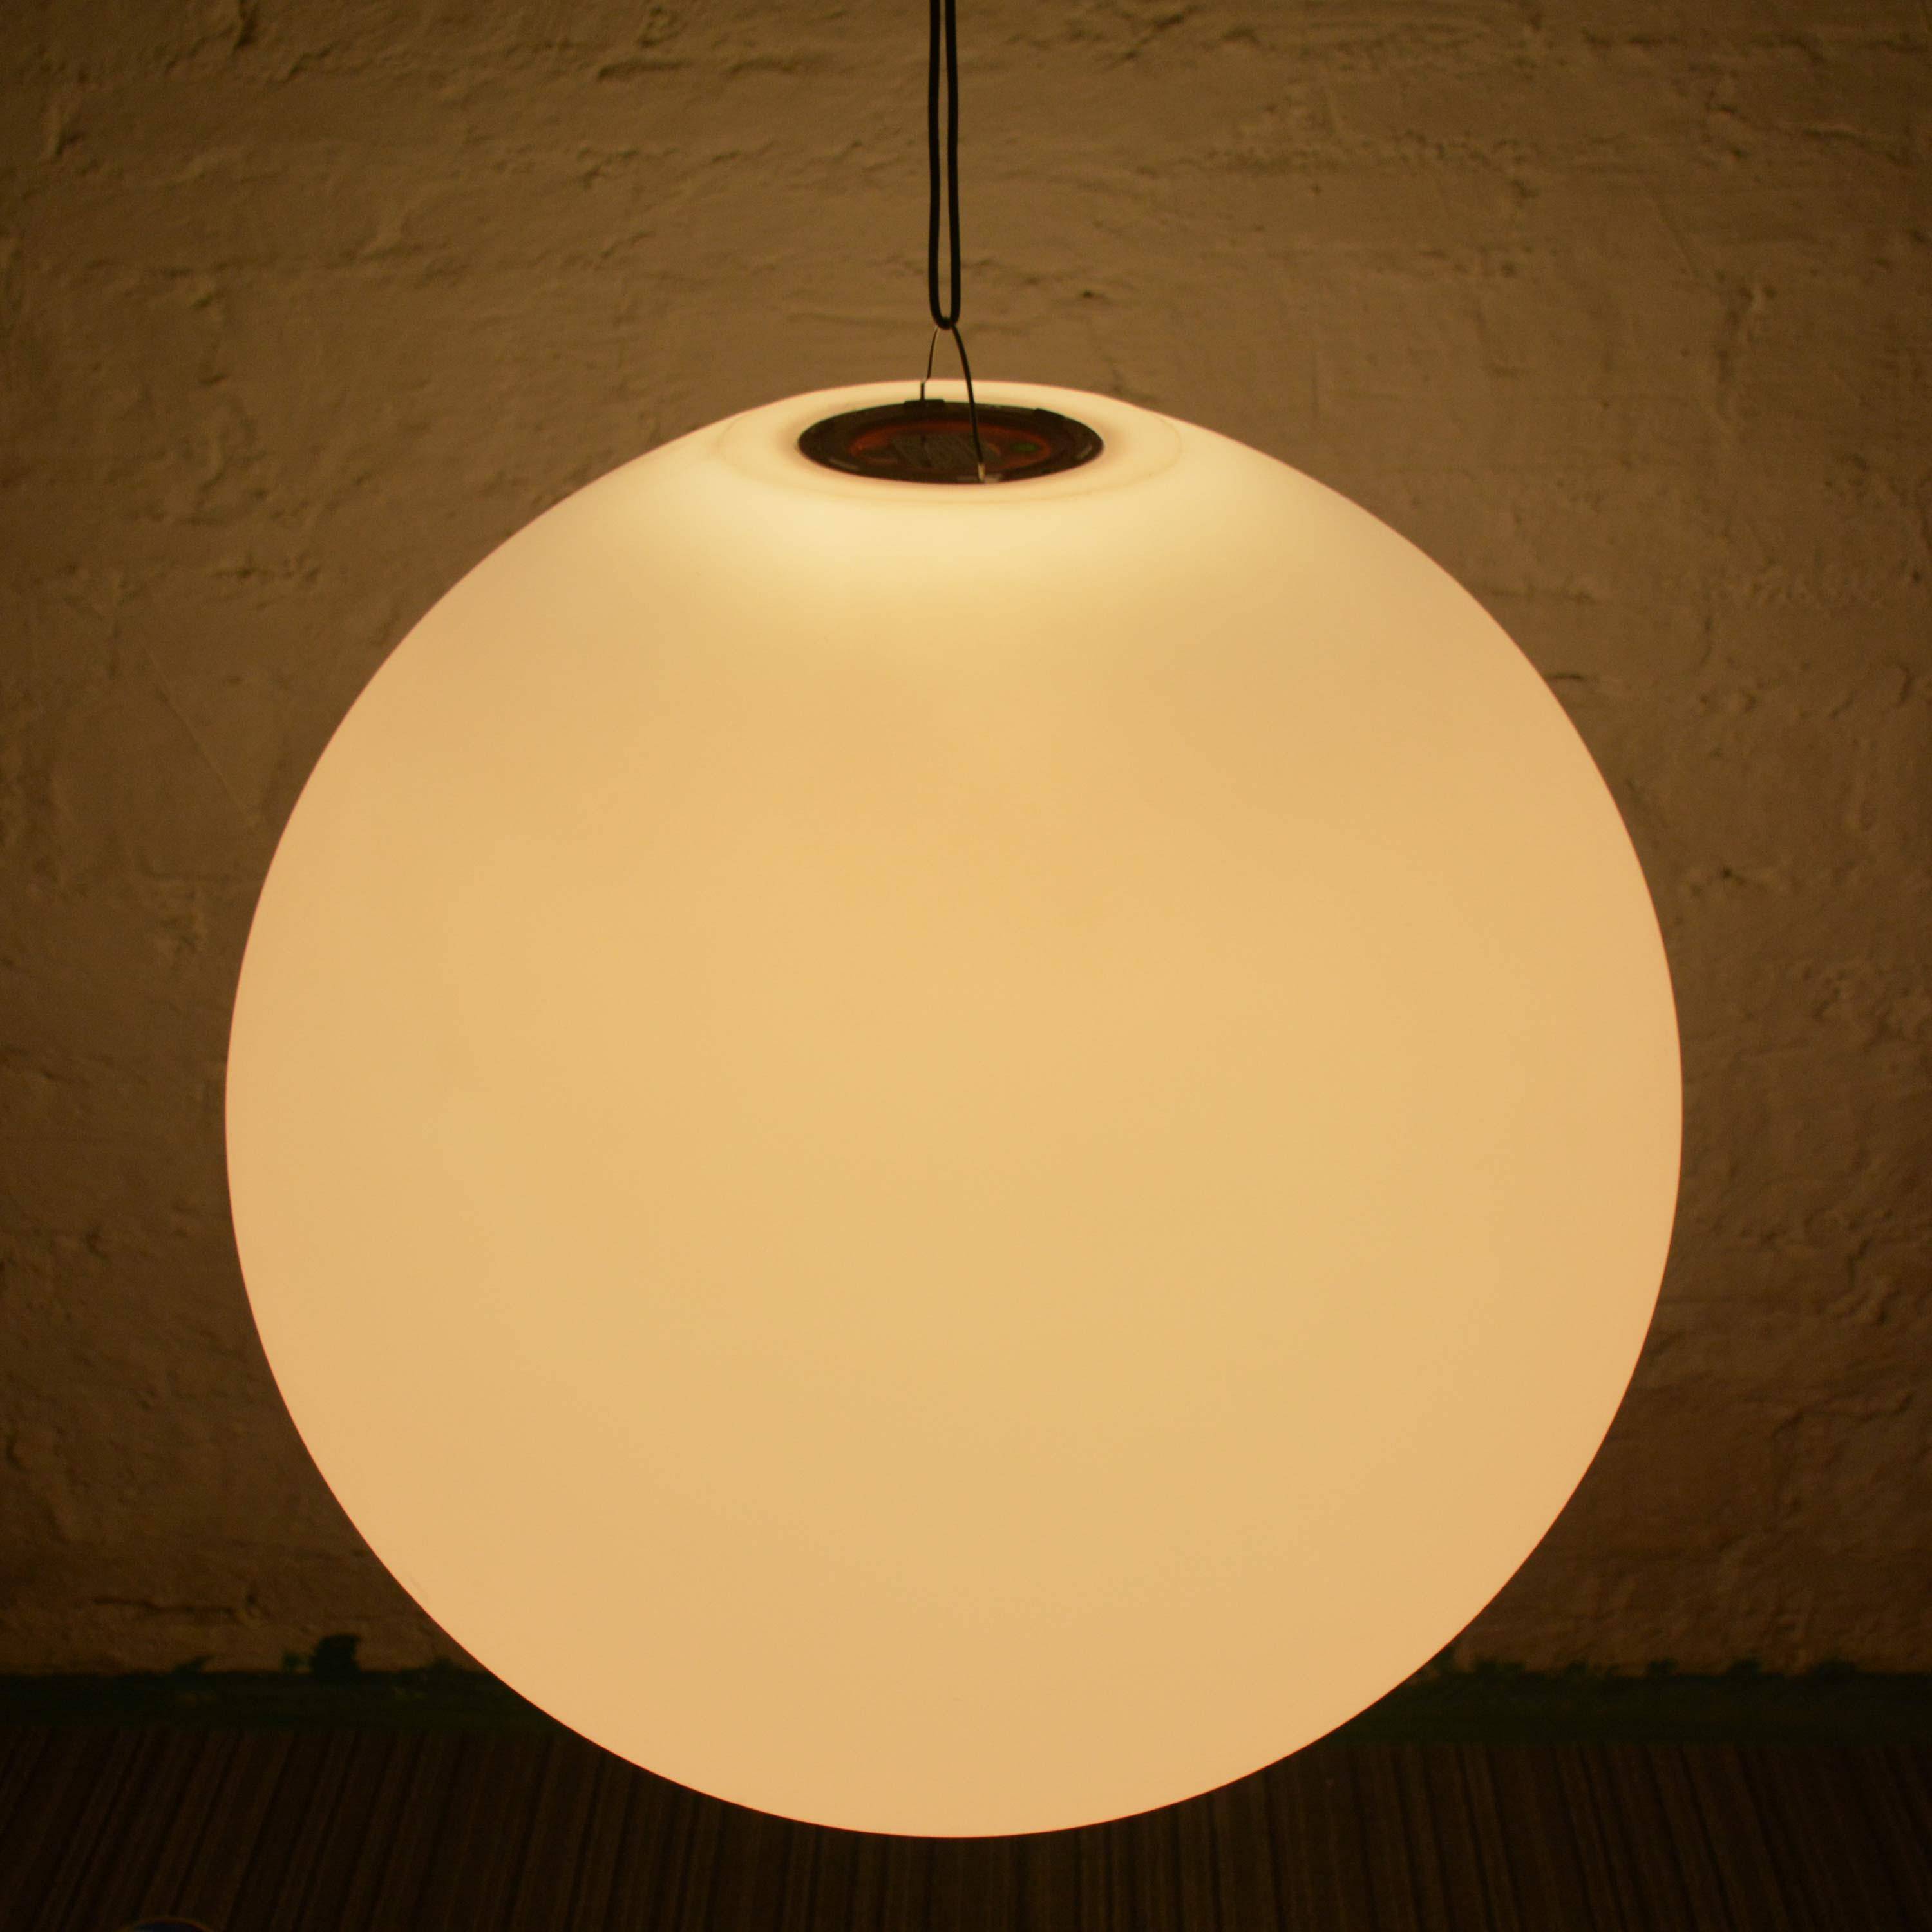 Bola LED 60cm - Bola de luz decorativa, Ø60cm, blanco cálido, control remoto,sweeek,Photo5